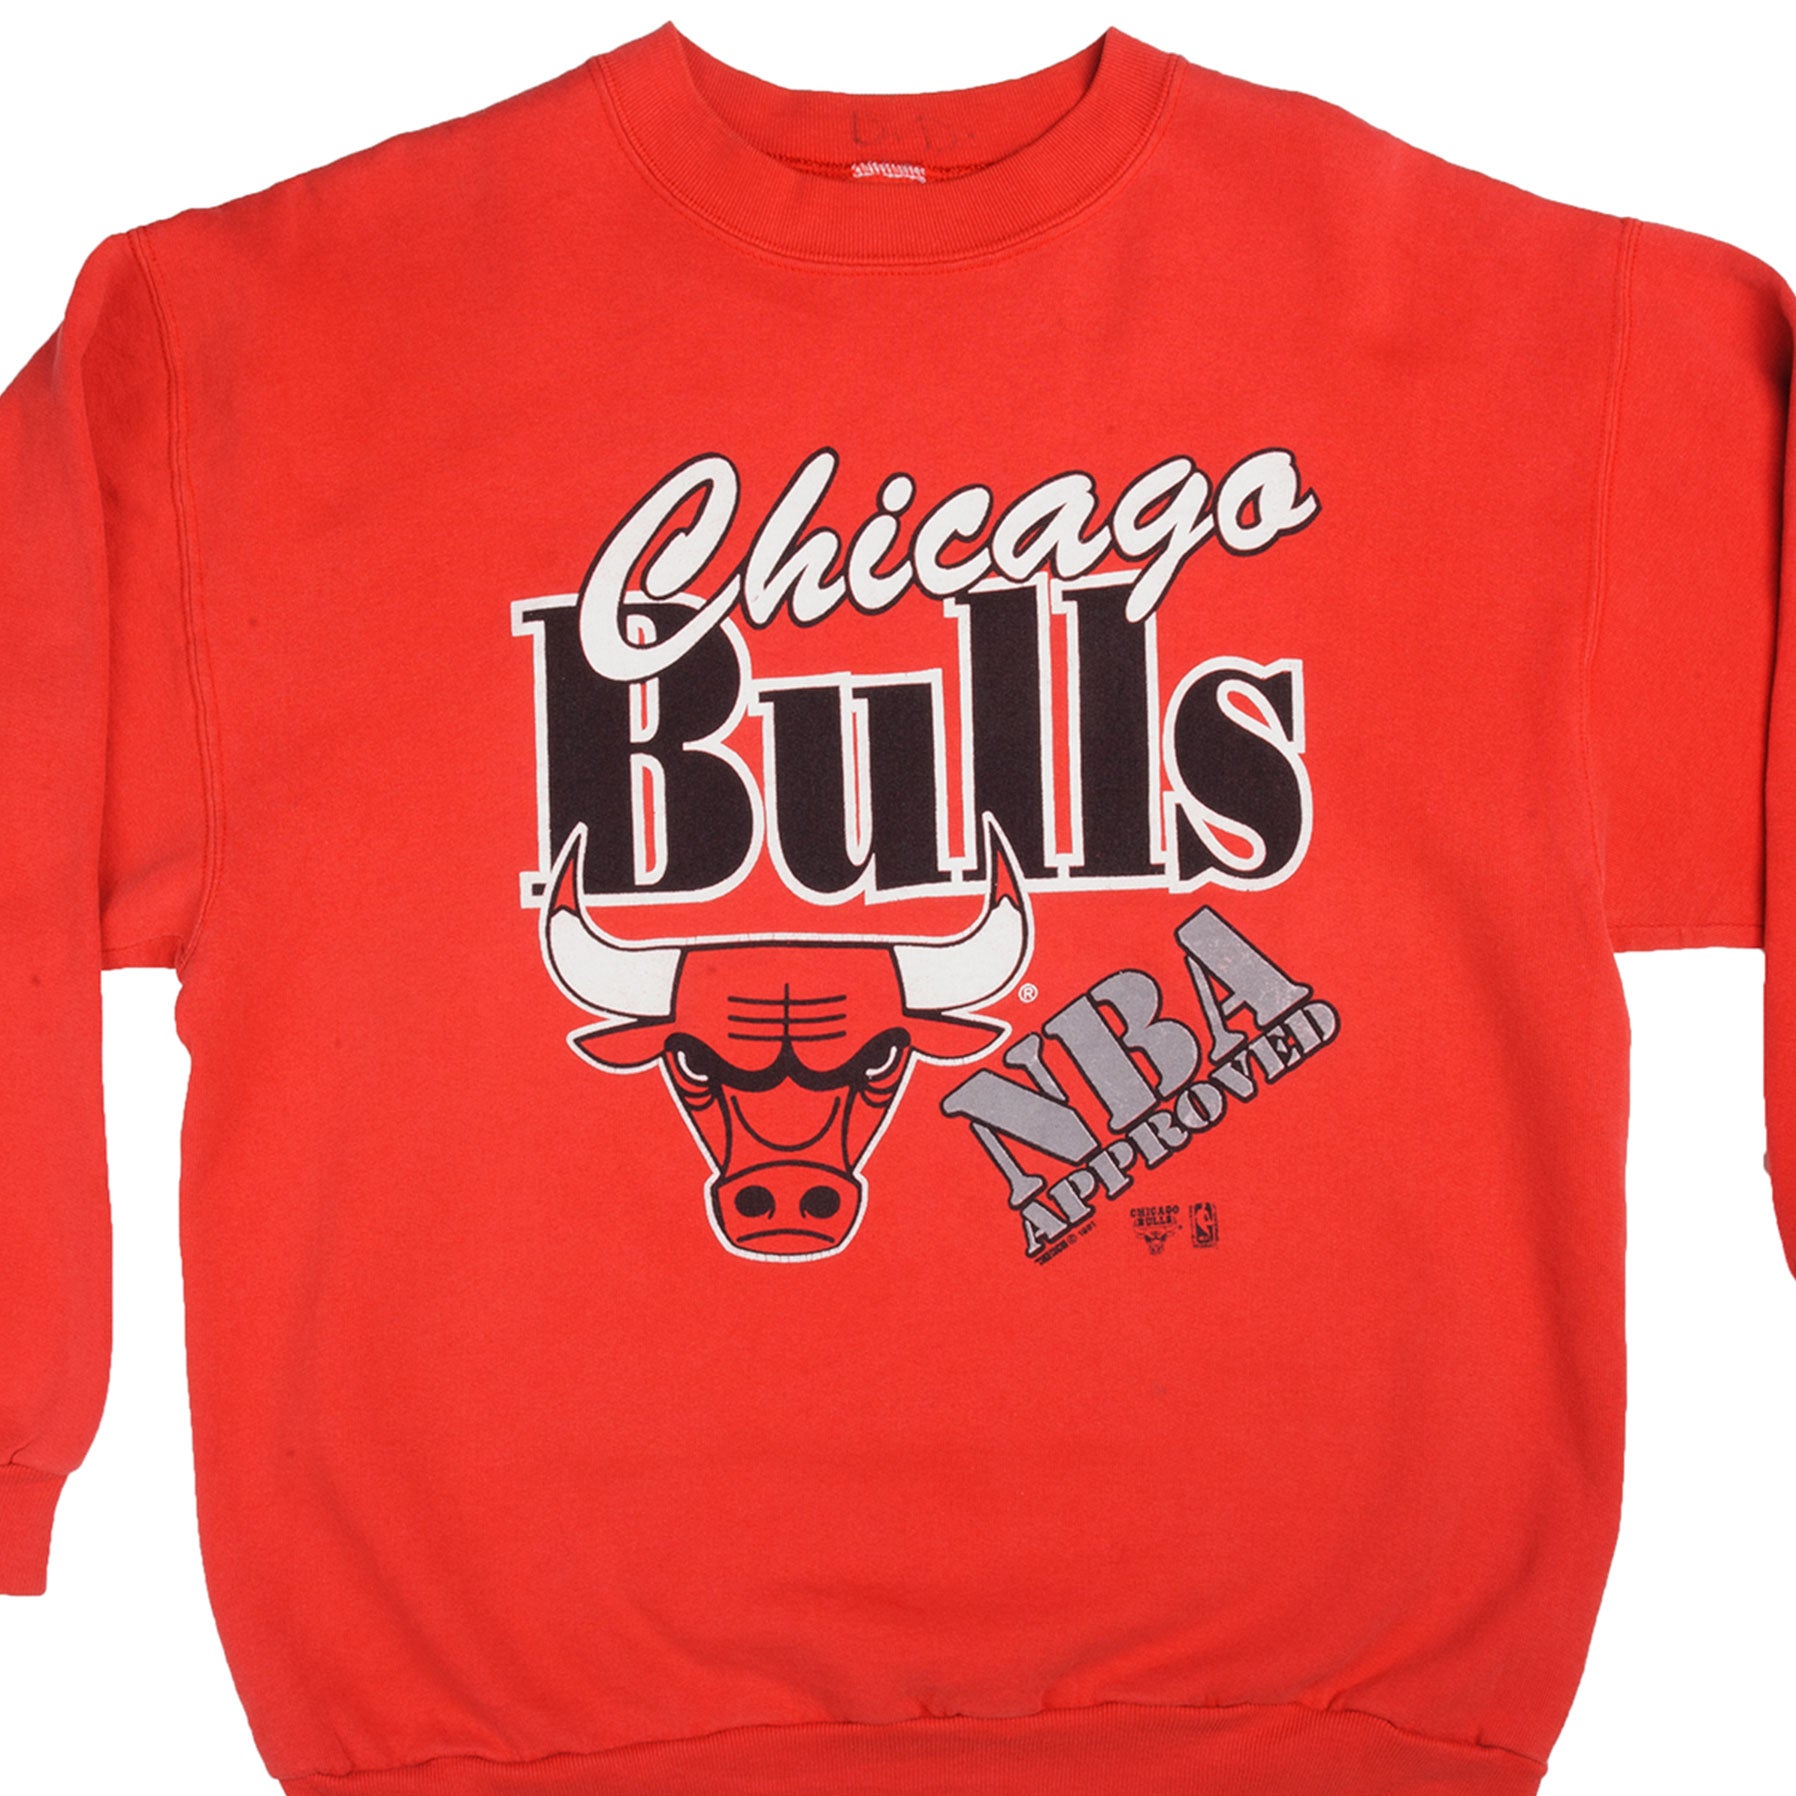 red chicago bulls sweater